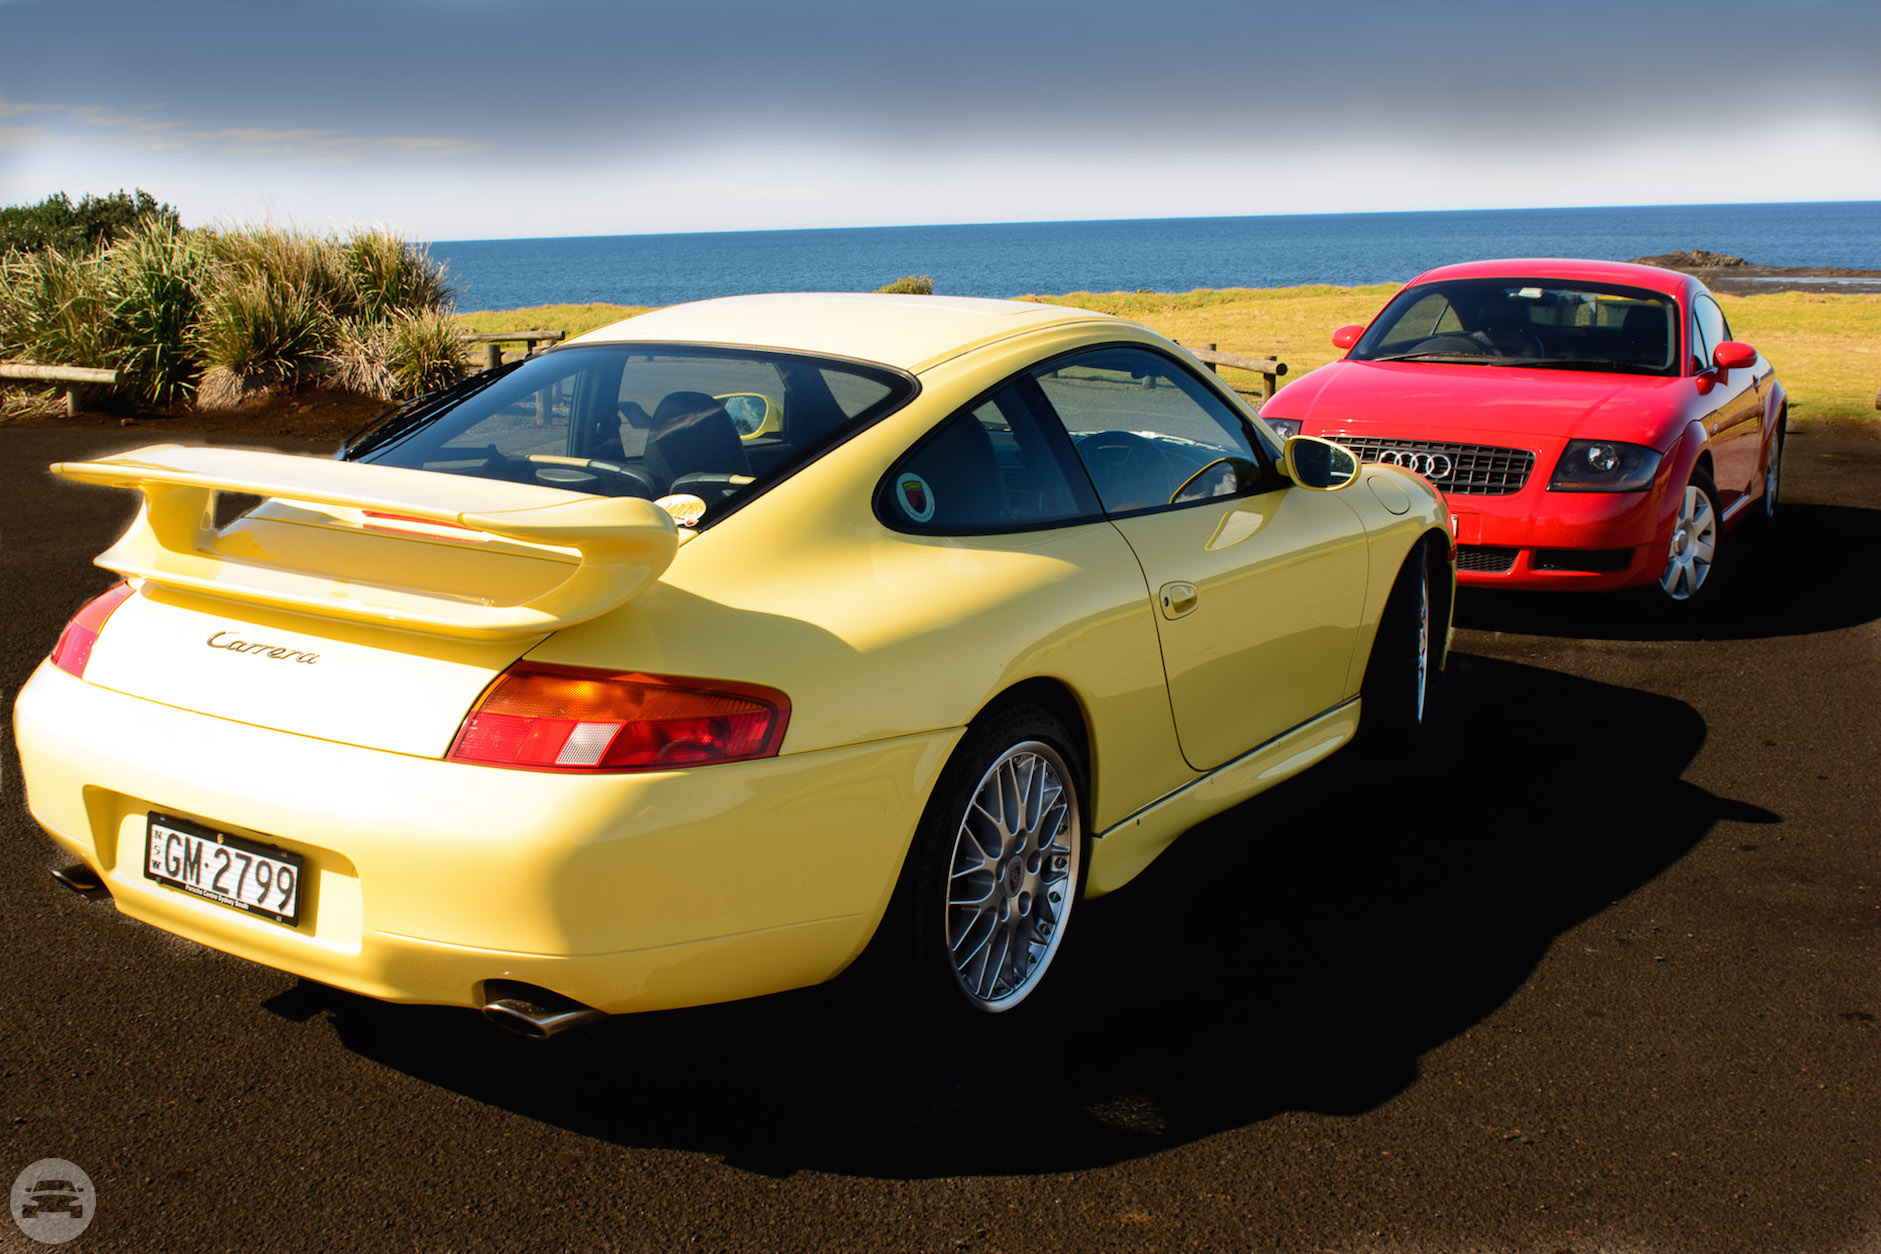 Porsche Carerra 
Sedan /
Wollongong NSW 2500, Australia

 / Hourly AUD$ 0.00
